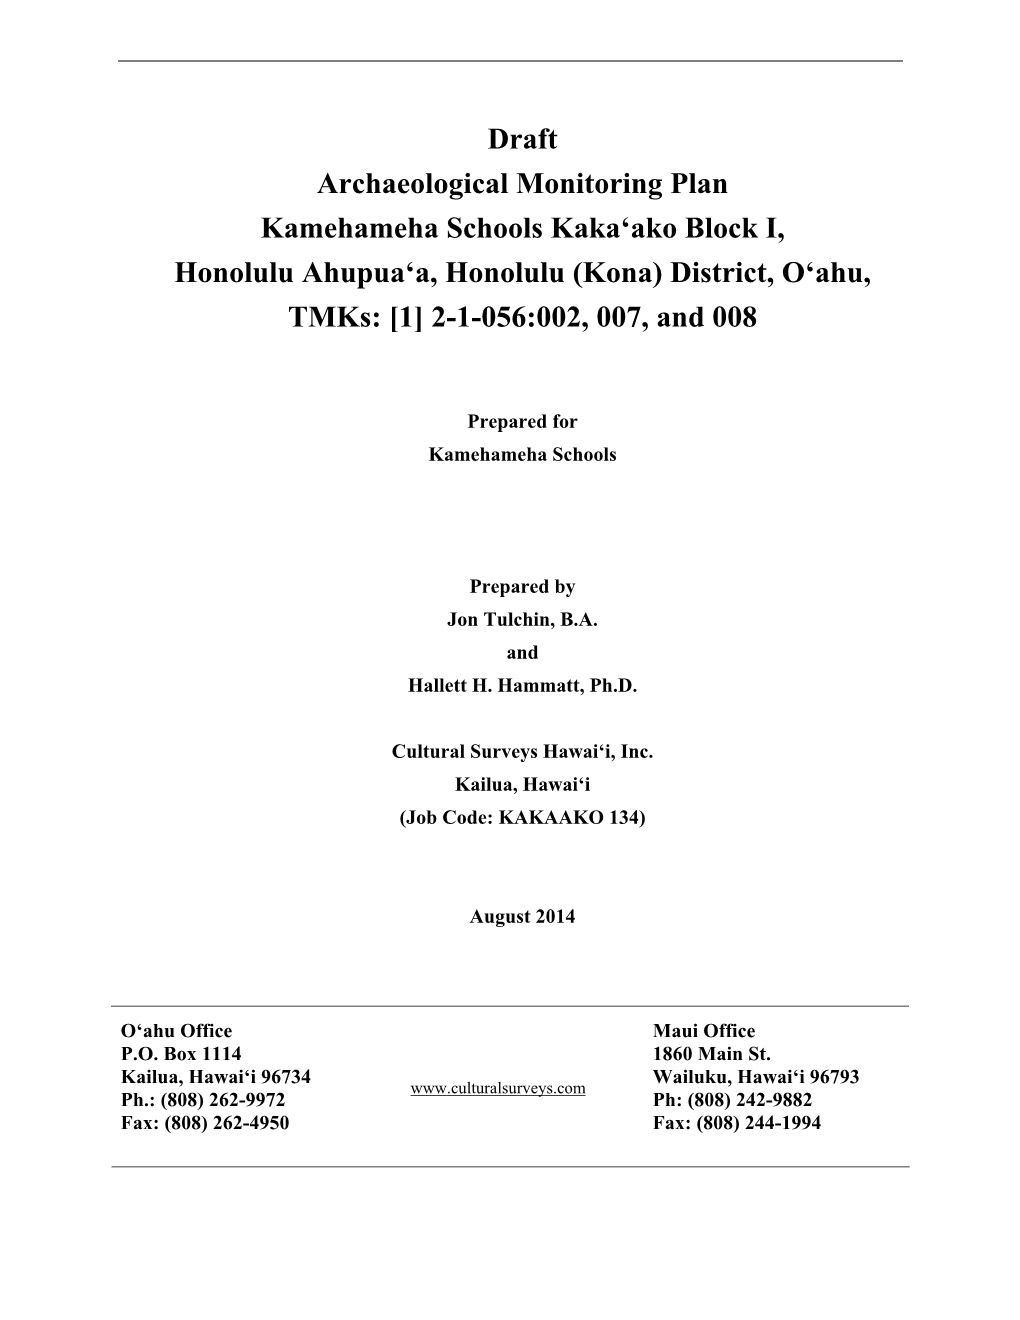 Draft Archaeological Monitoring Plan Kamehameha Schools Kaka'ako